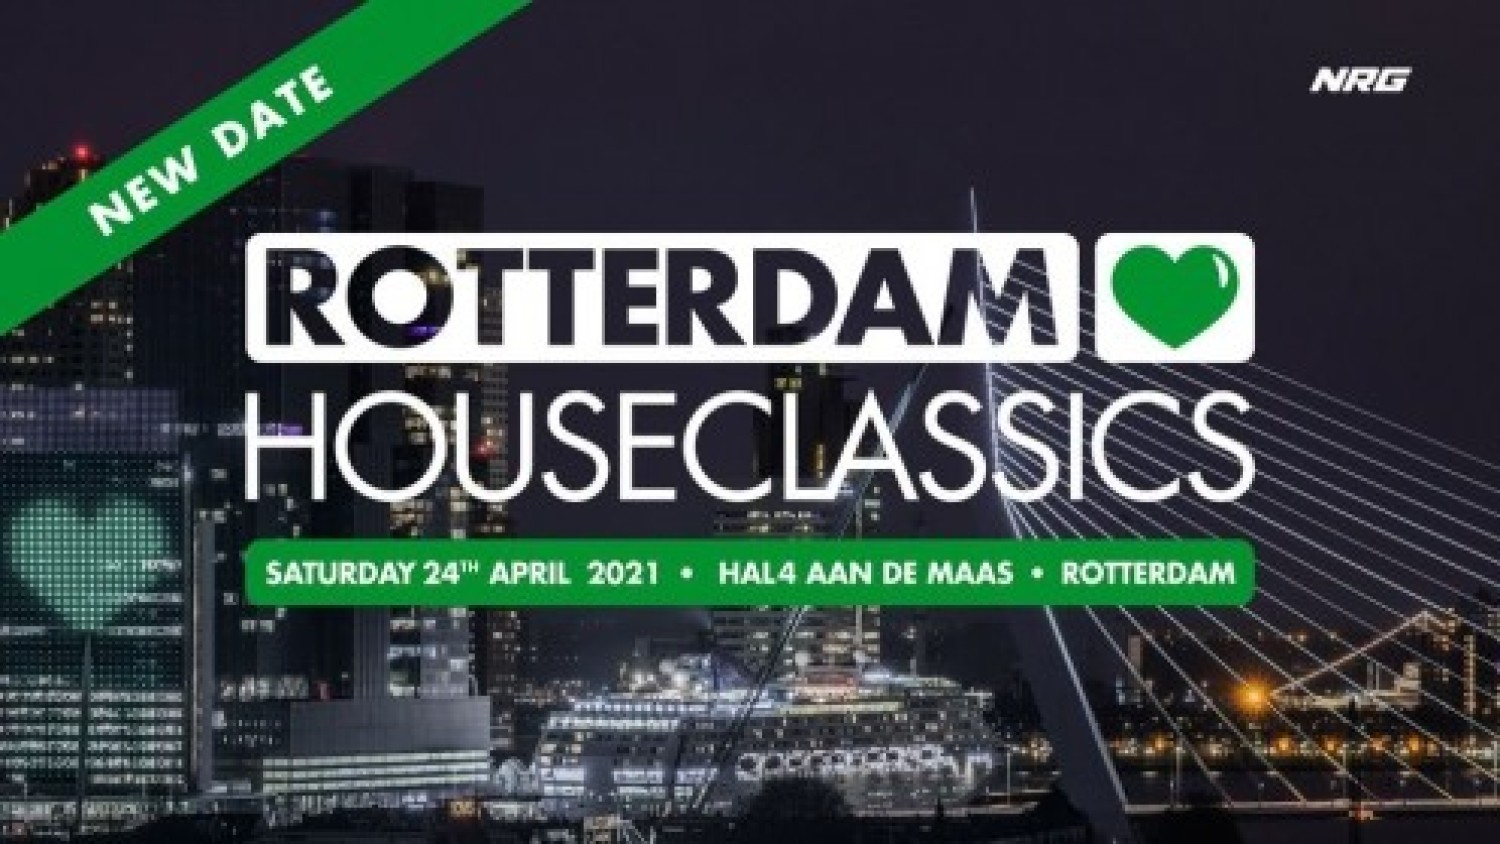 Rotterdam loves Houseclassics